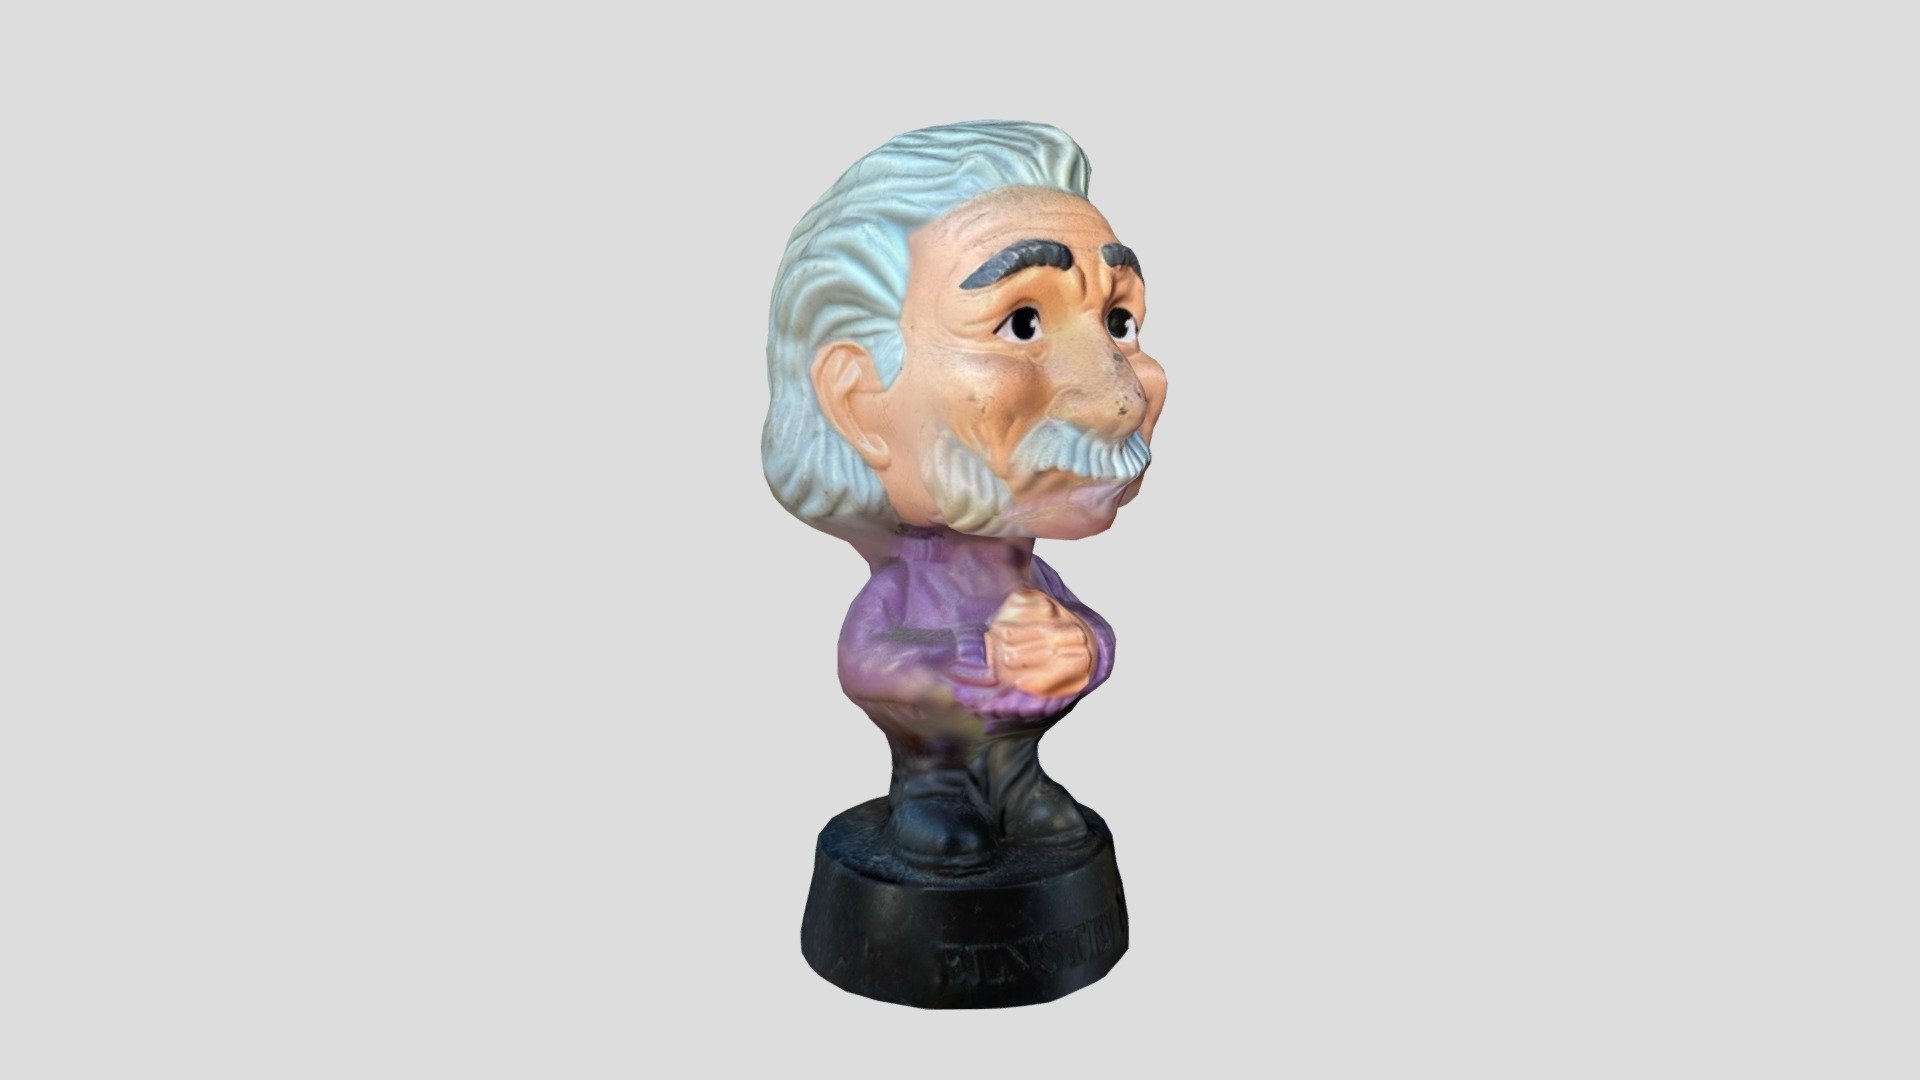 McDonald happy meal figure of Einsten - Albert Einstein - Buy Royalty Free 3D model by italianimator 3d model